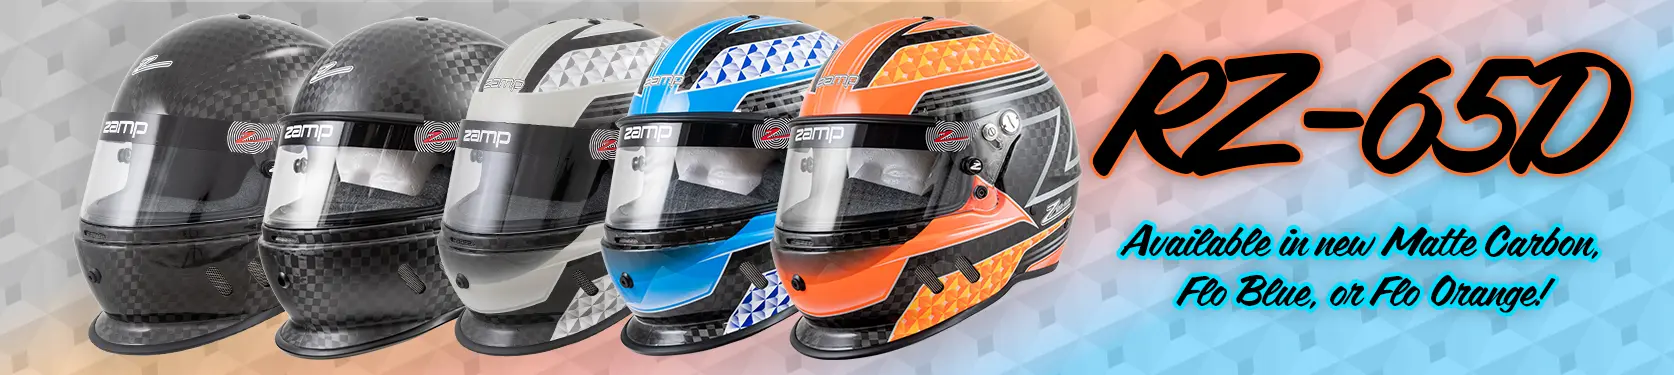 RZ-65D Helmets